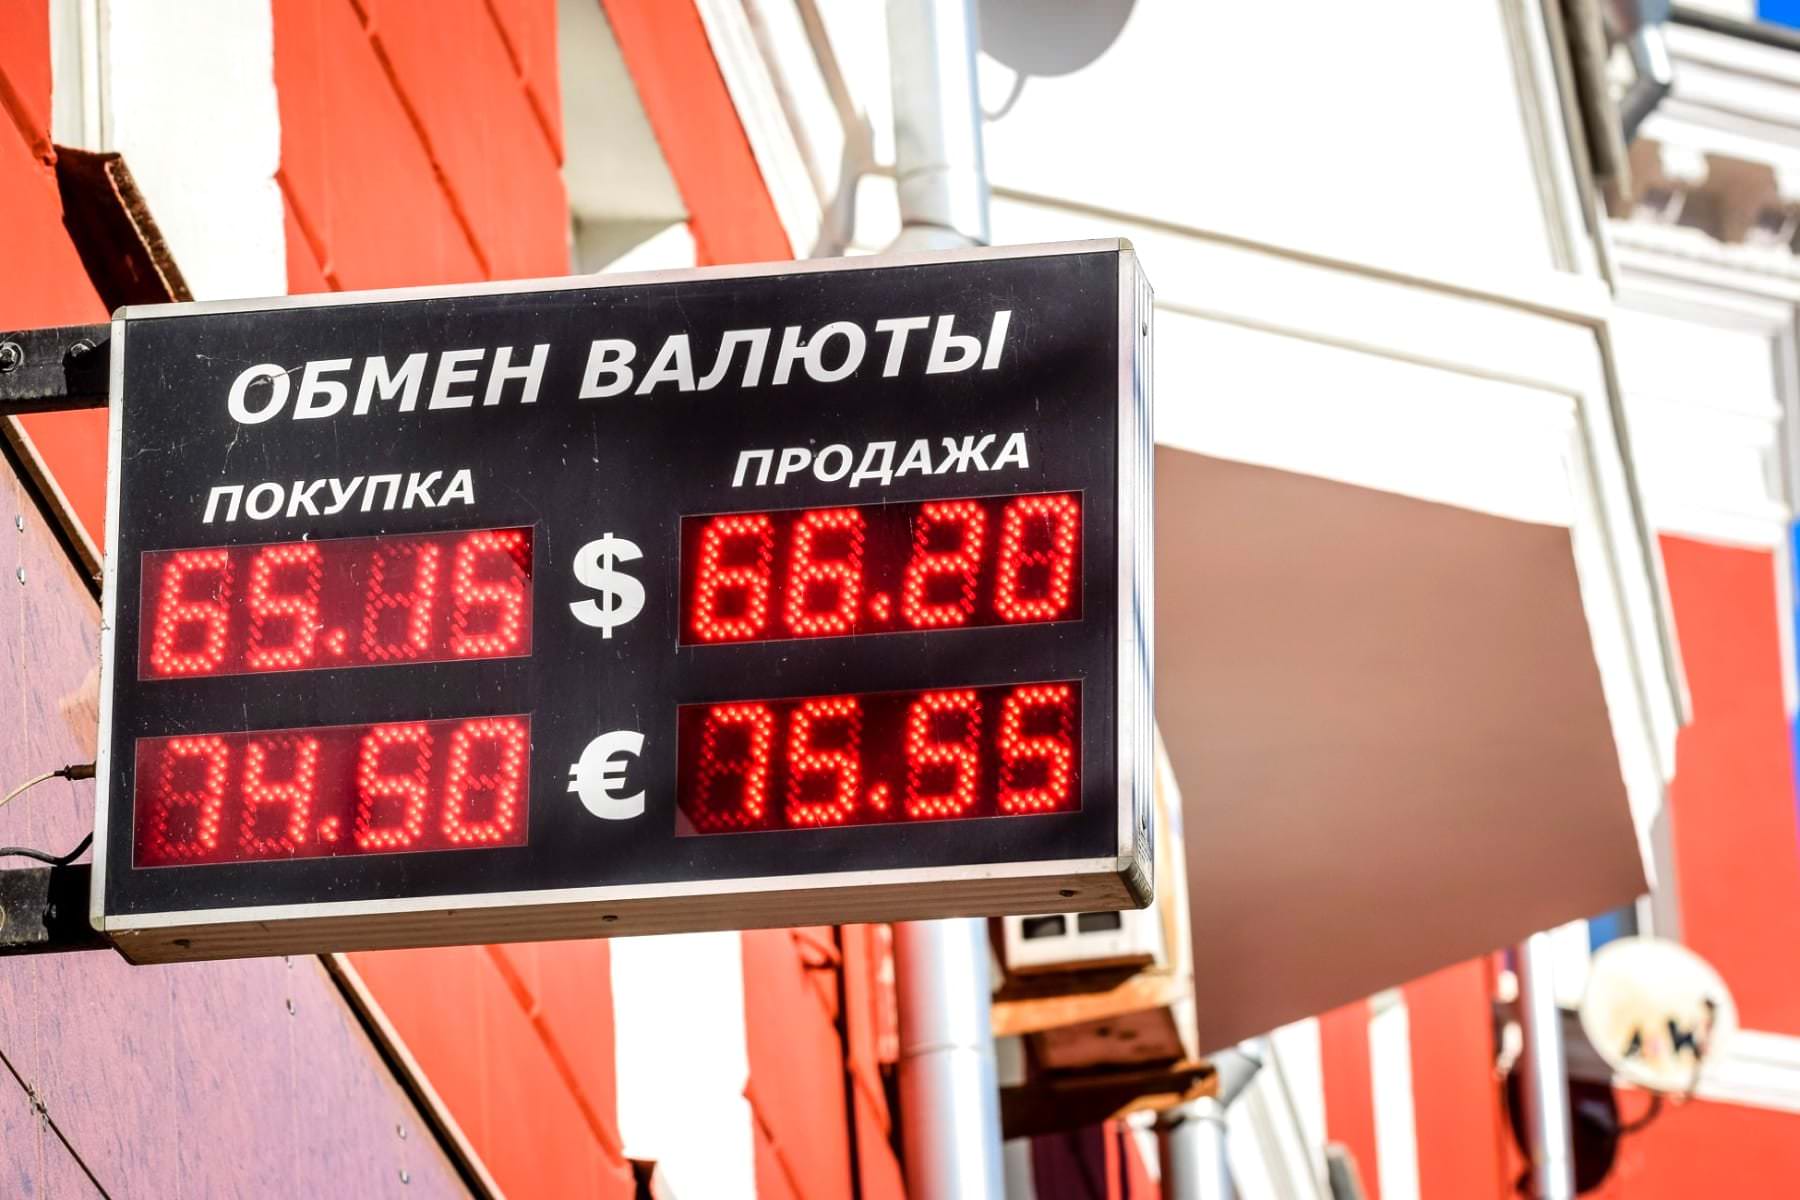 Доллар и евро рекордно подорожали. Российский рубль резко обвалился в цене